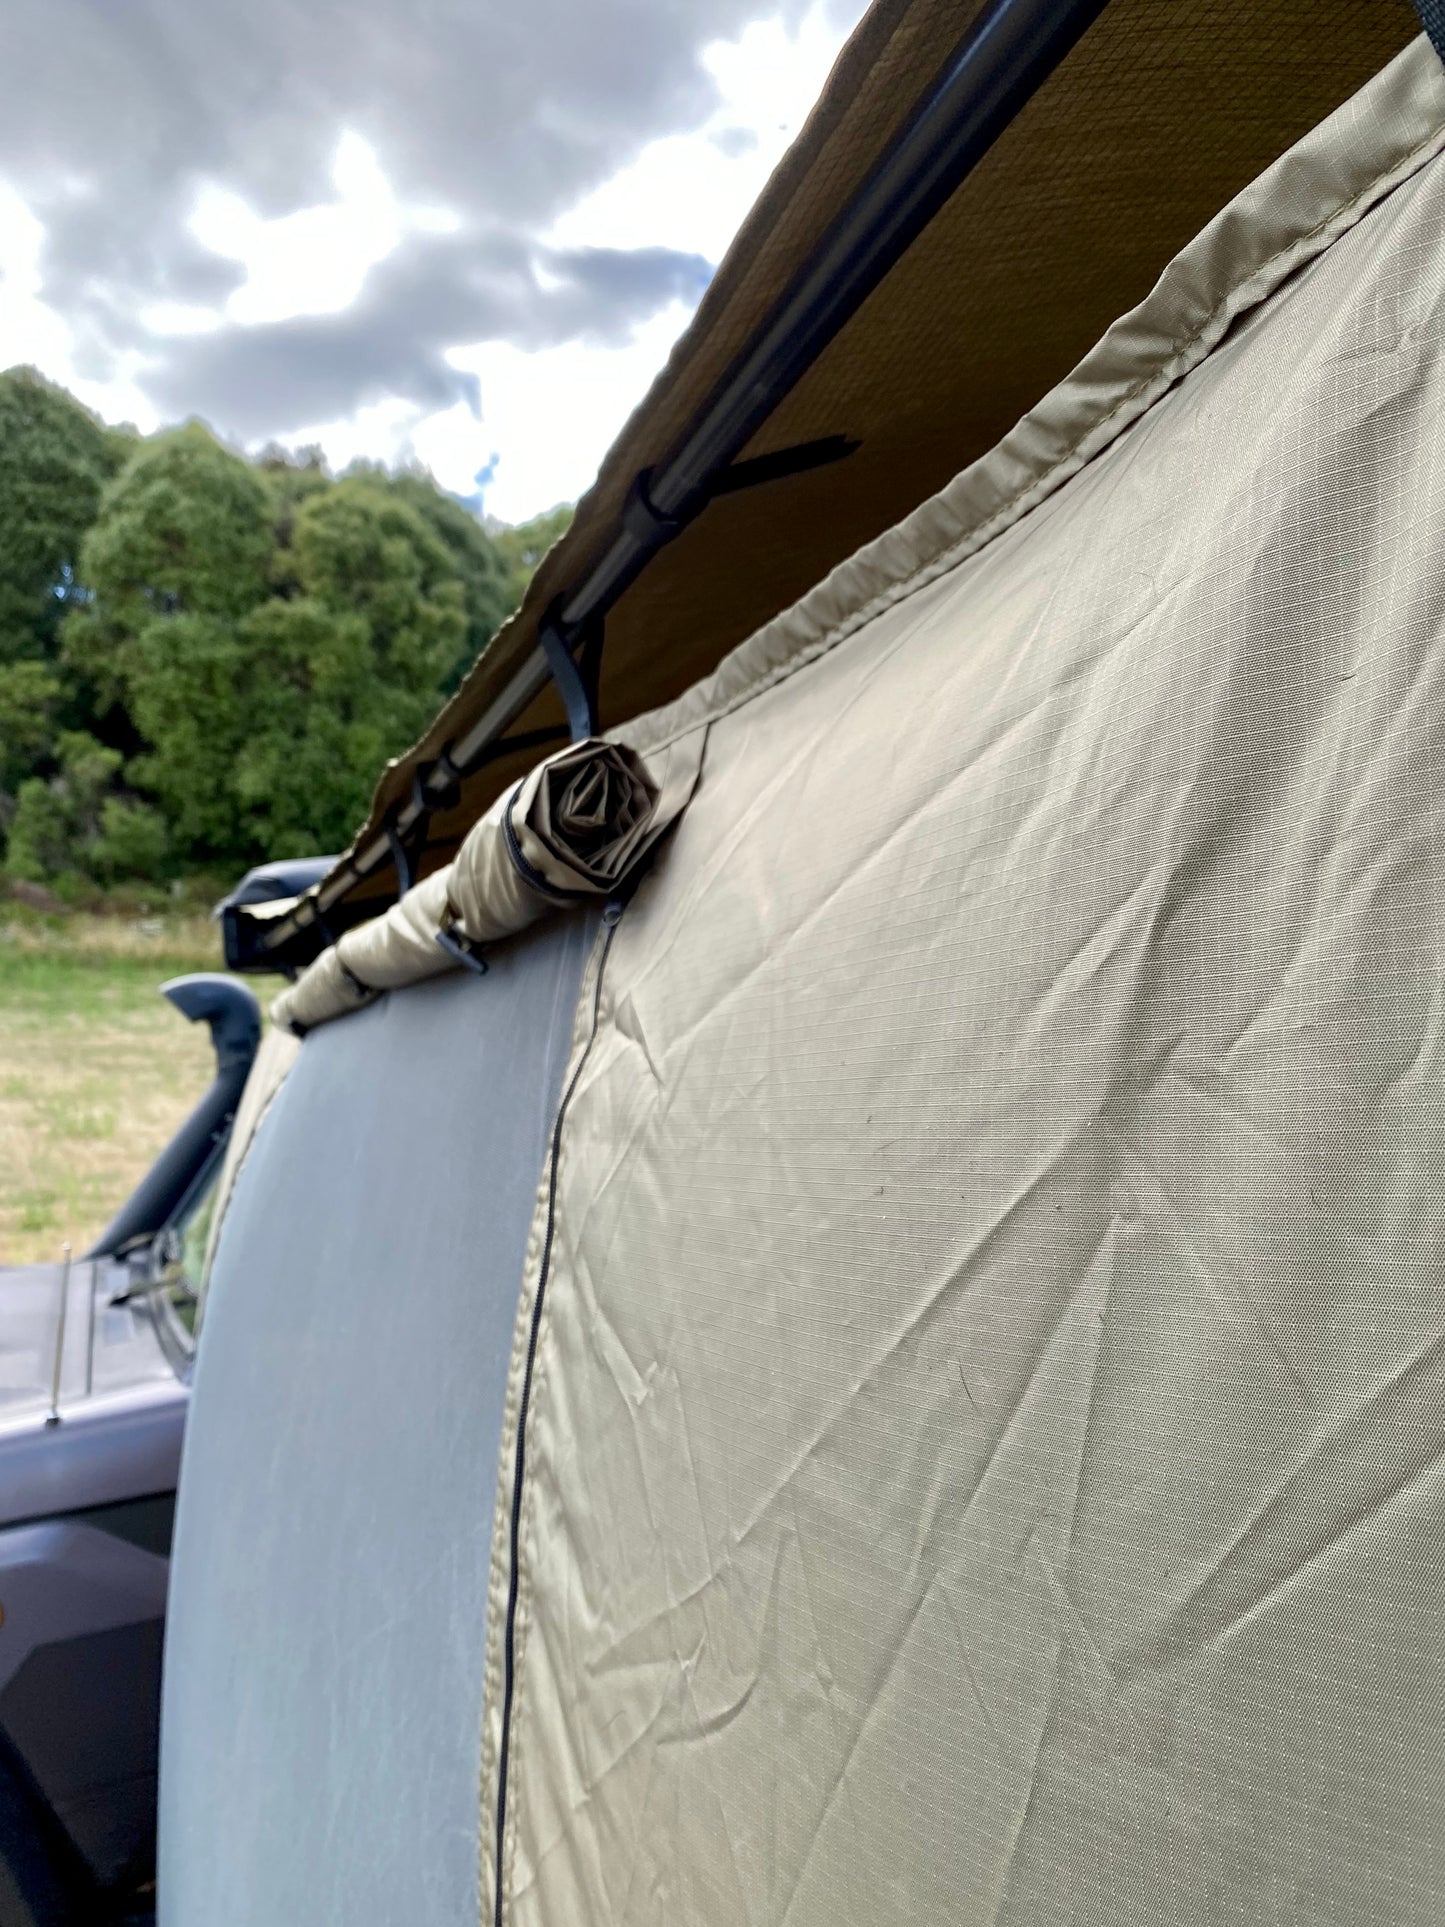 RMR Awning Tent - 2m x 2.5m PRE ORDER